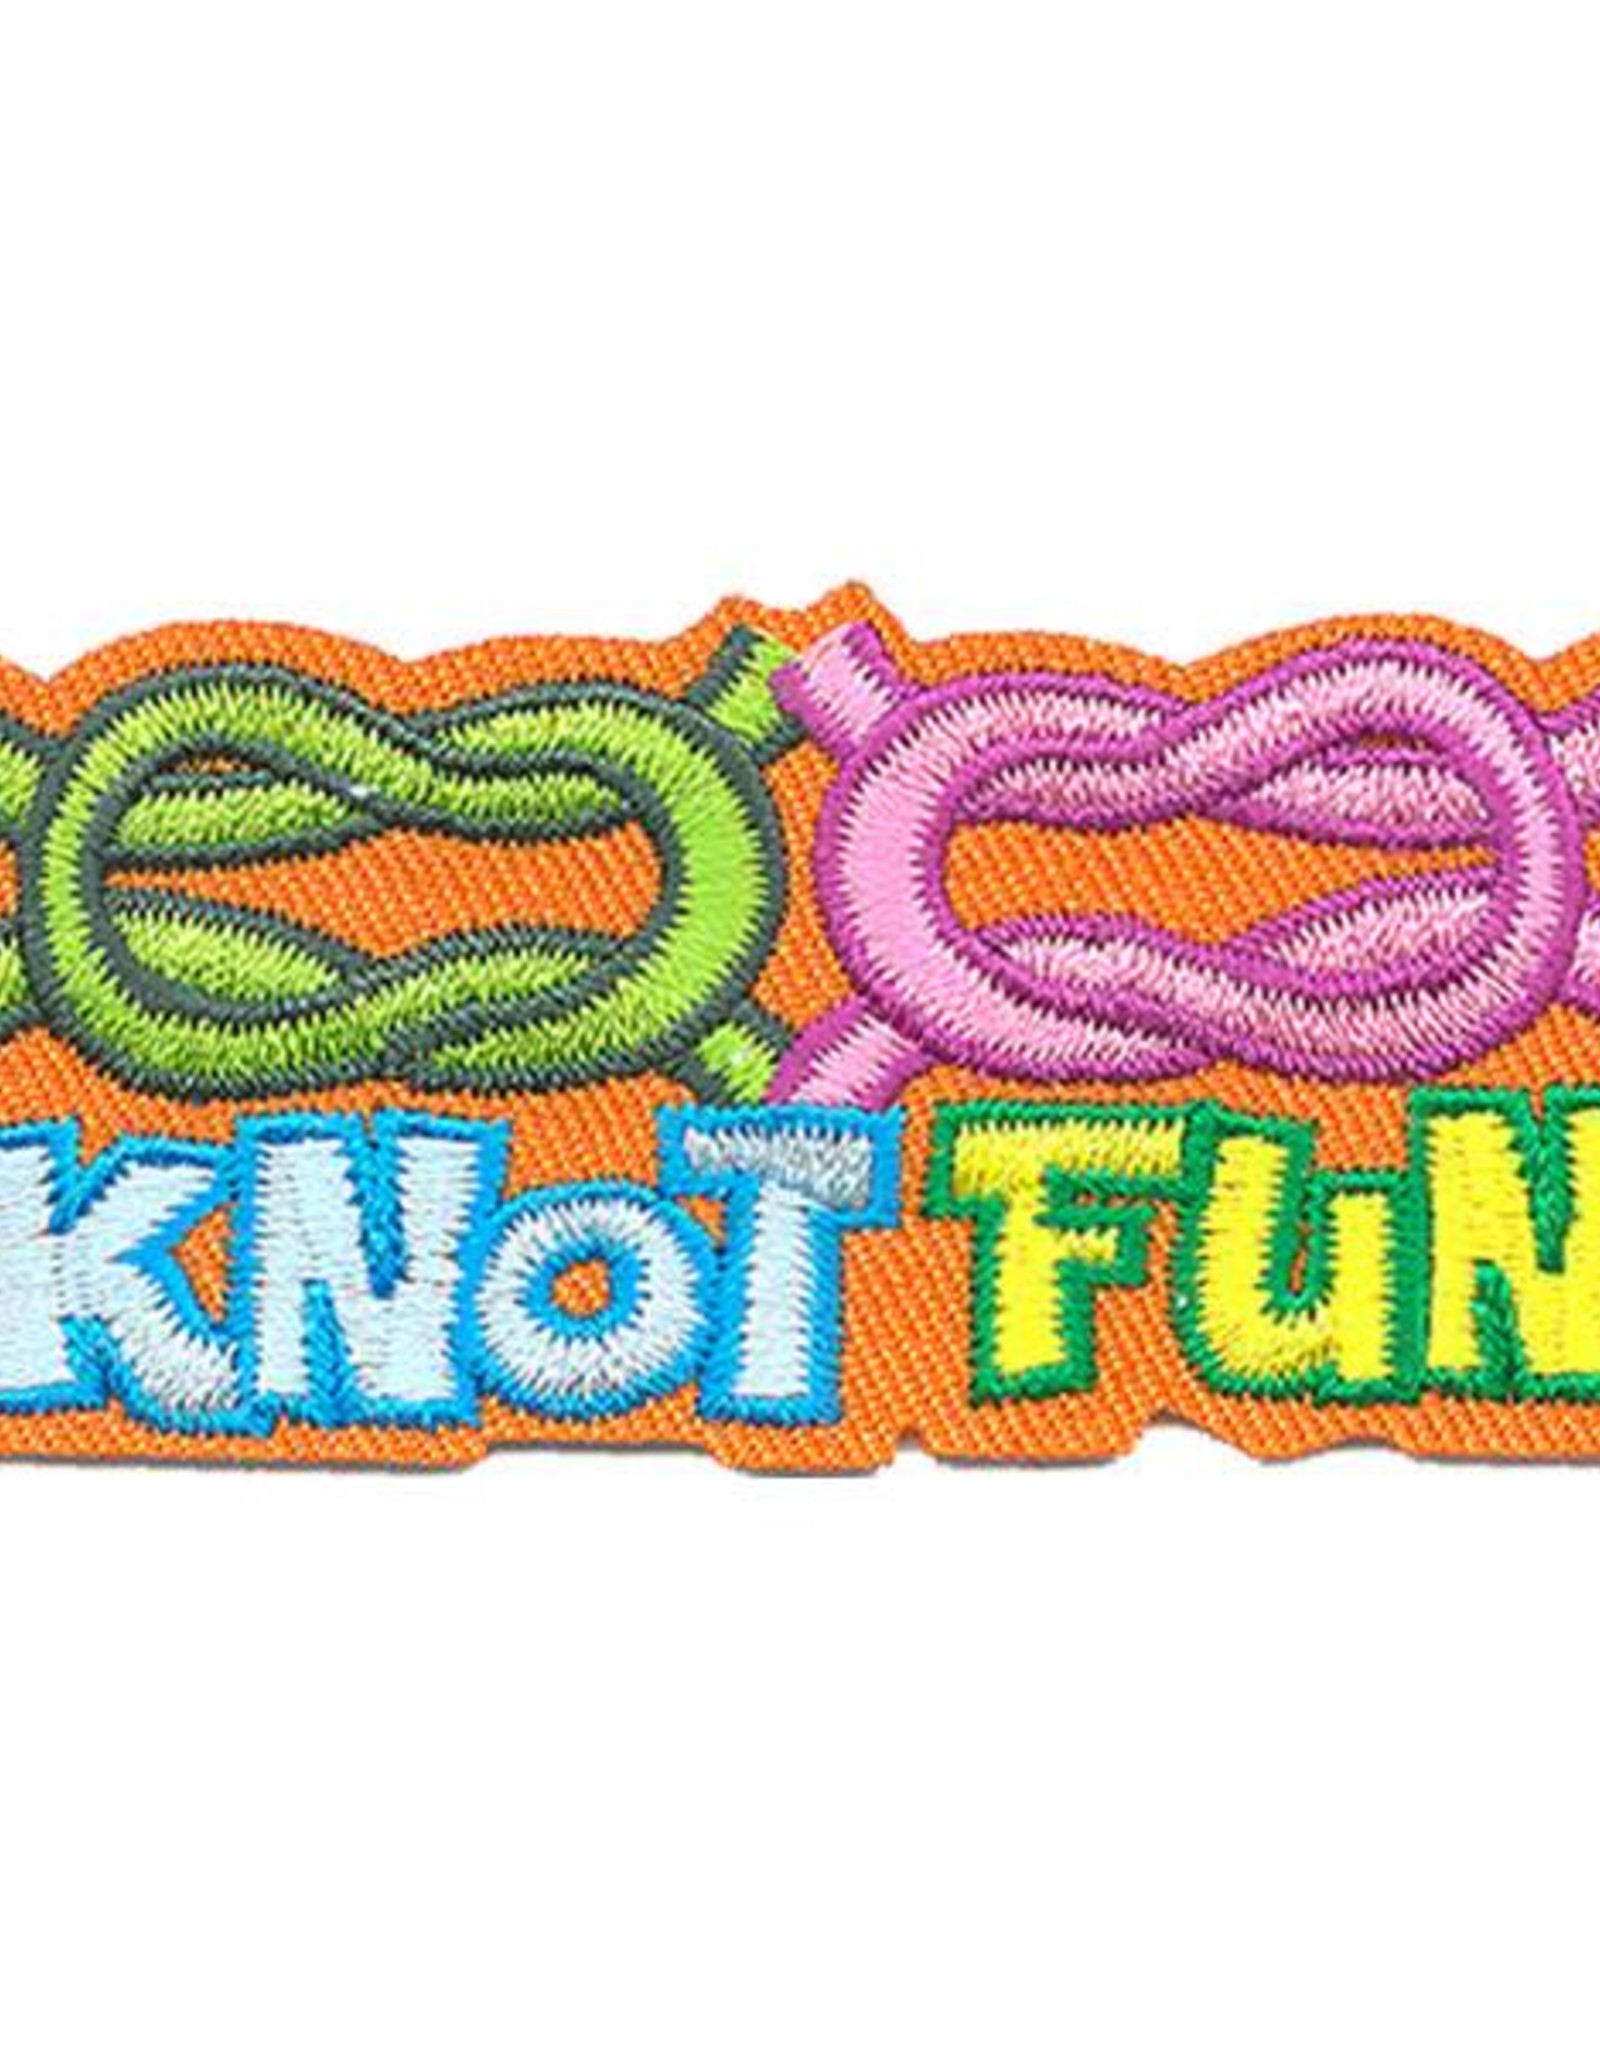 Advantage Emblem & Screen Prnt Knot Fun Fun Patch